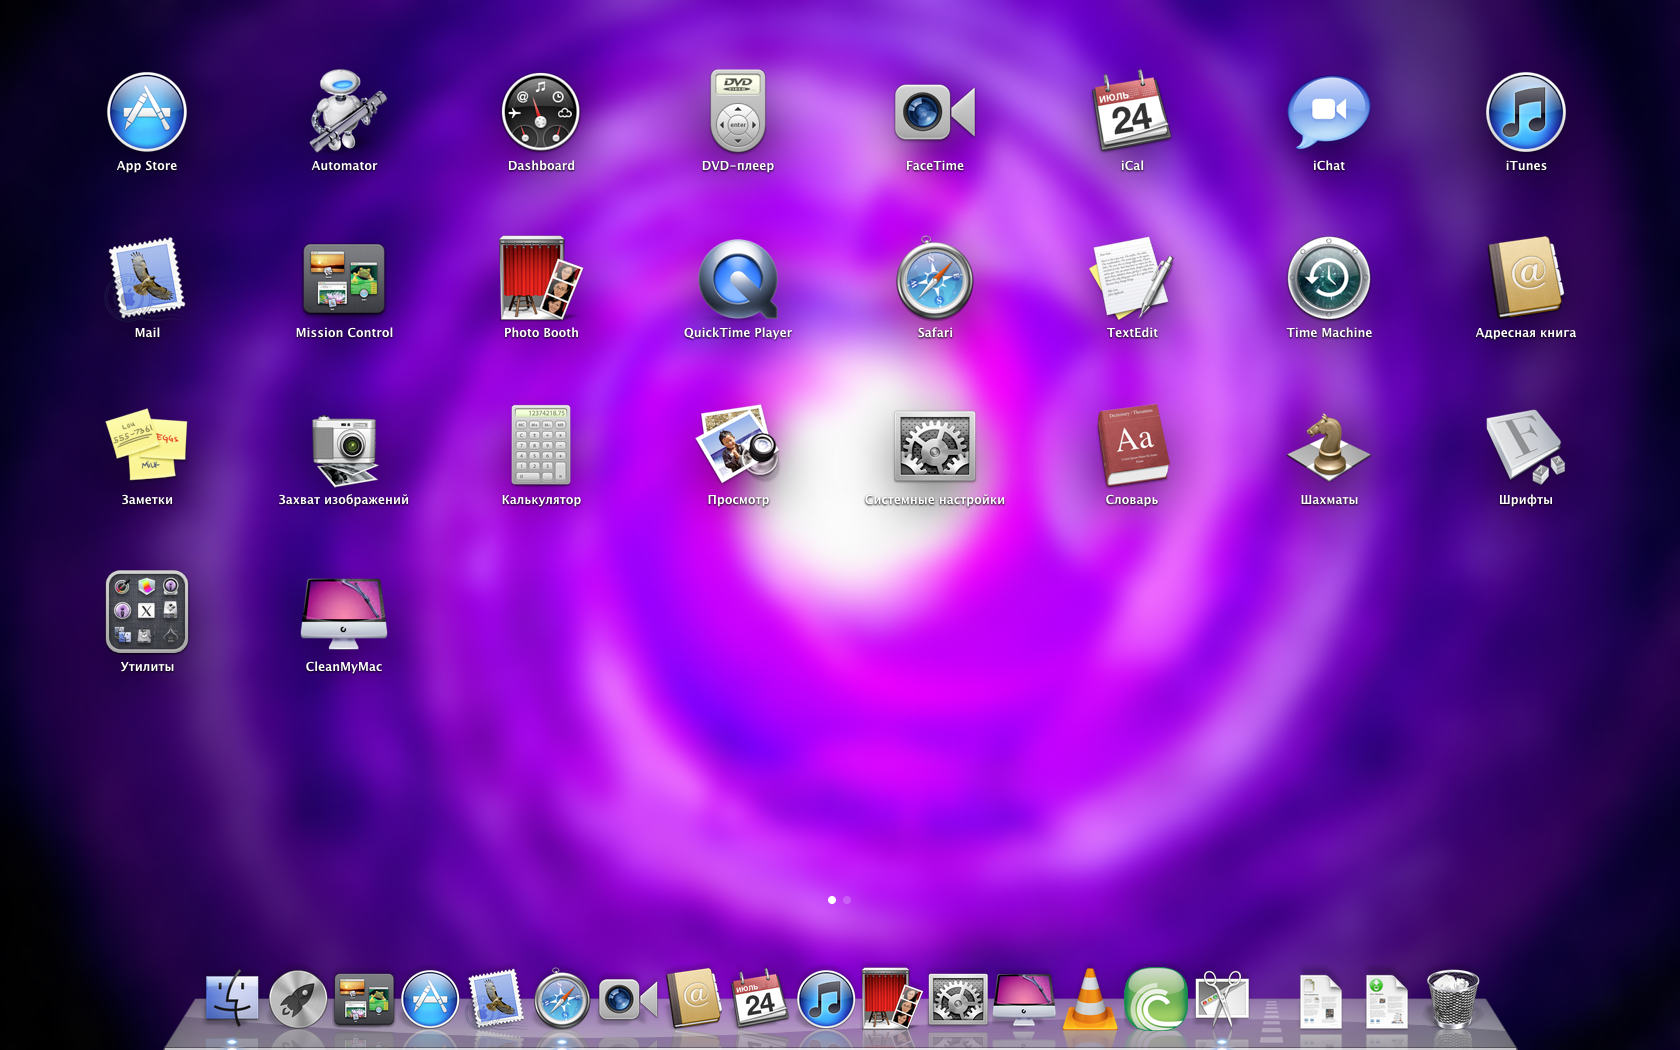 CoolerMac v.2 (Mac OS X 10.7.0 Lion) ©Cooler MacLab